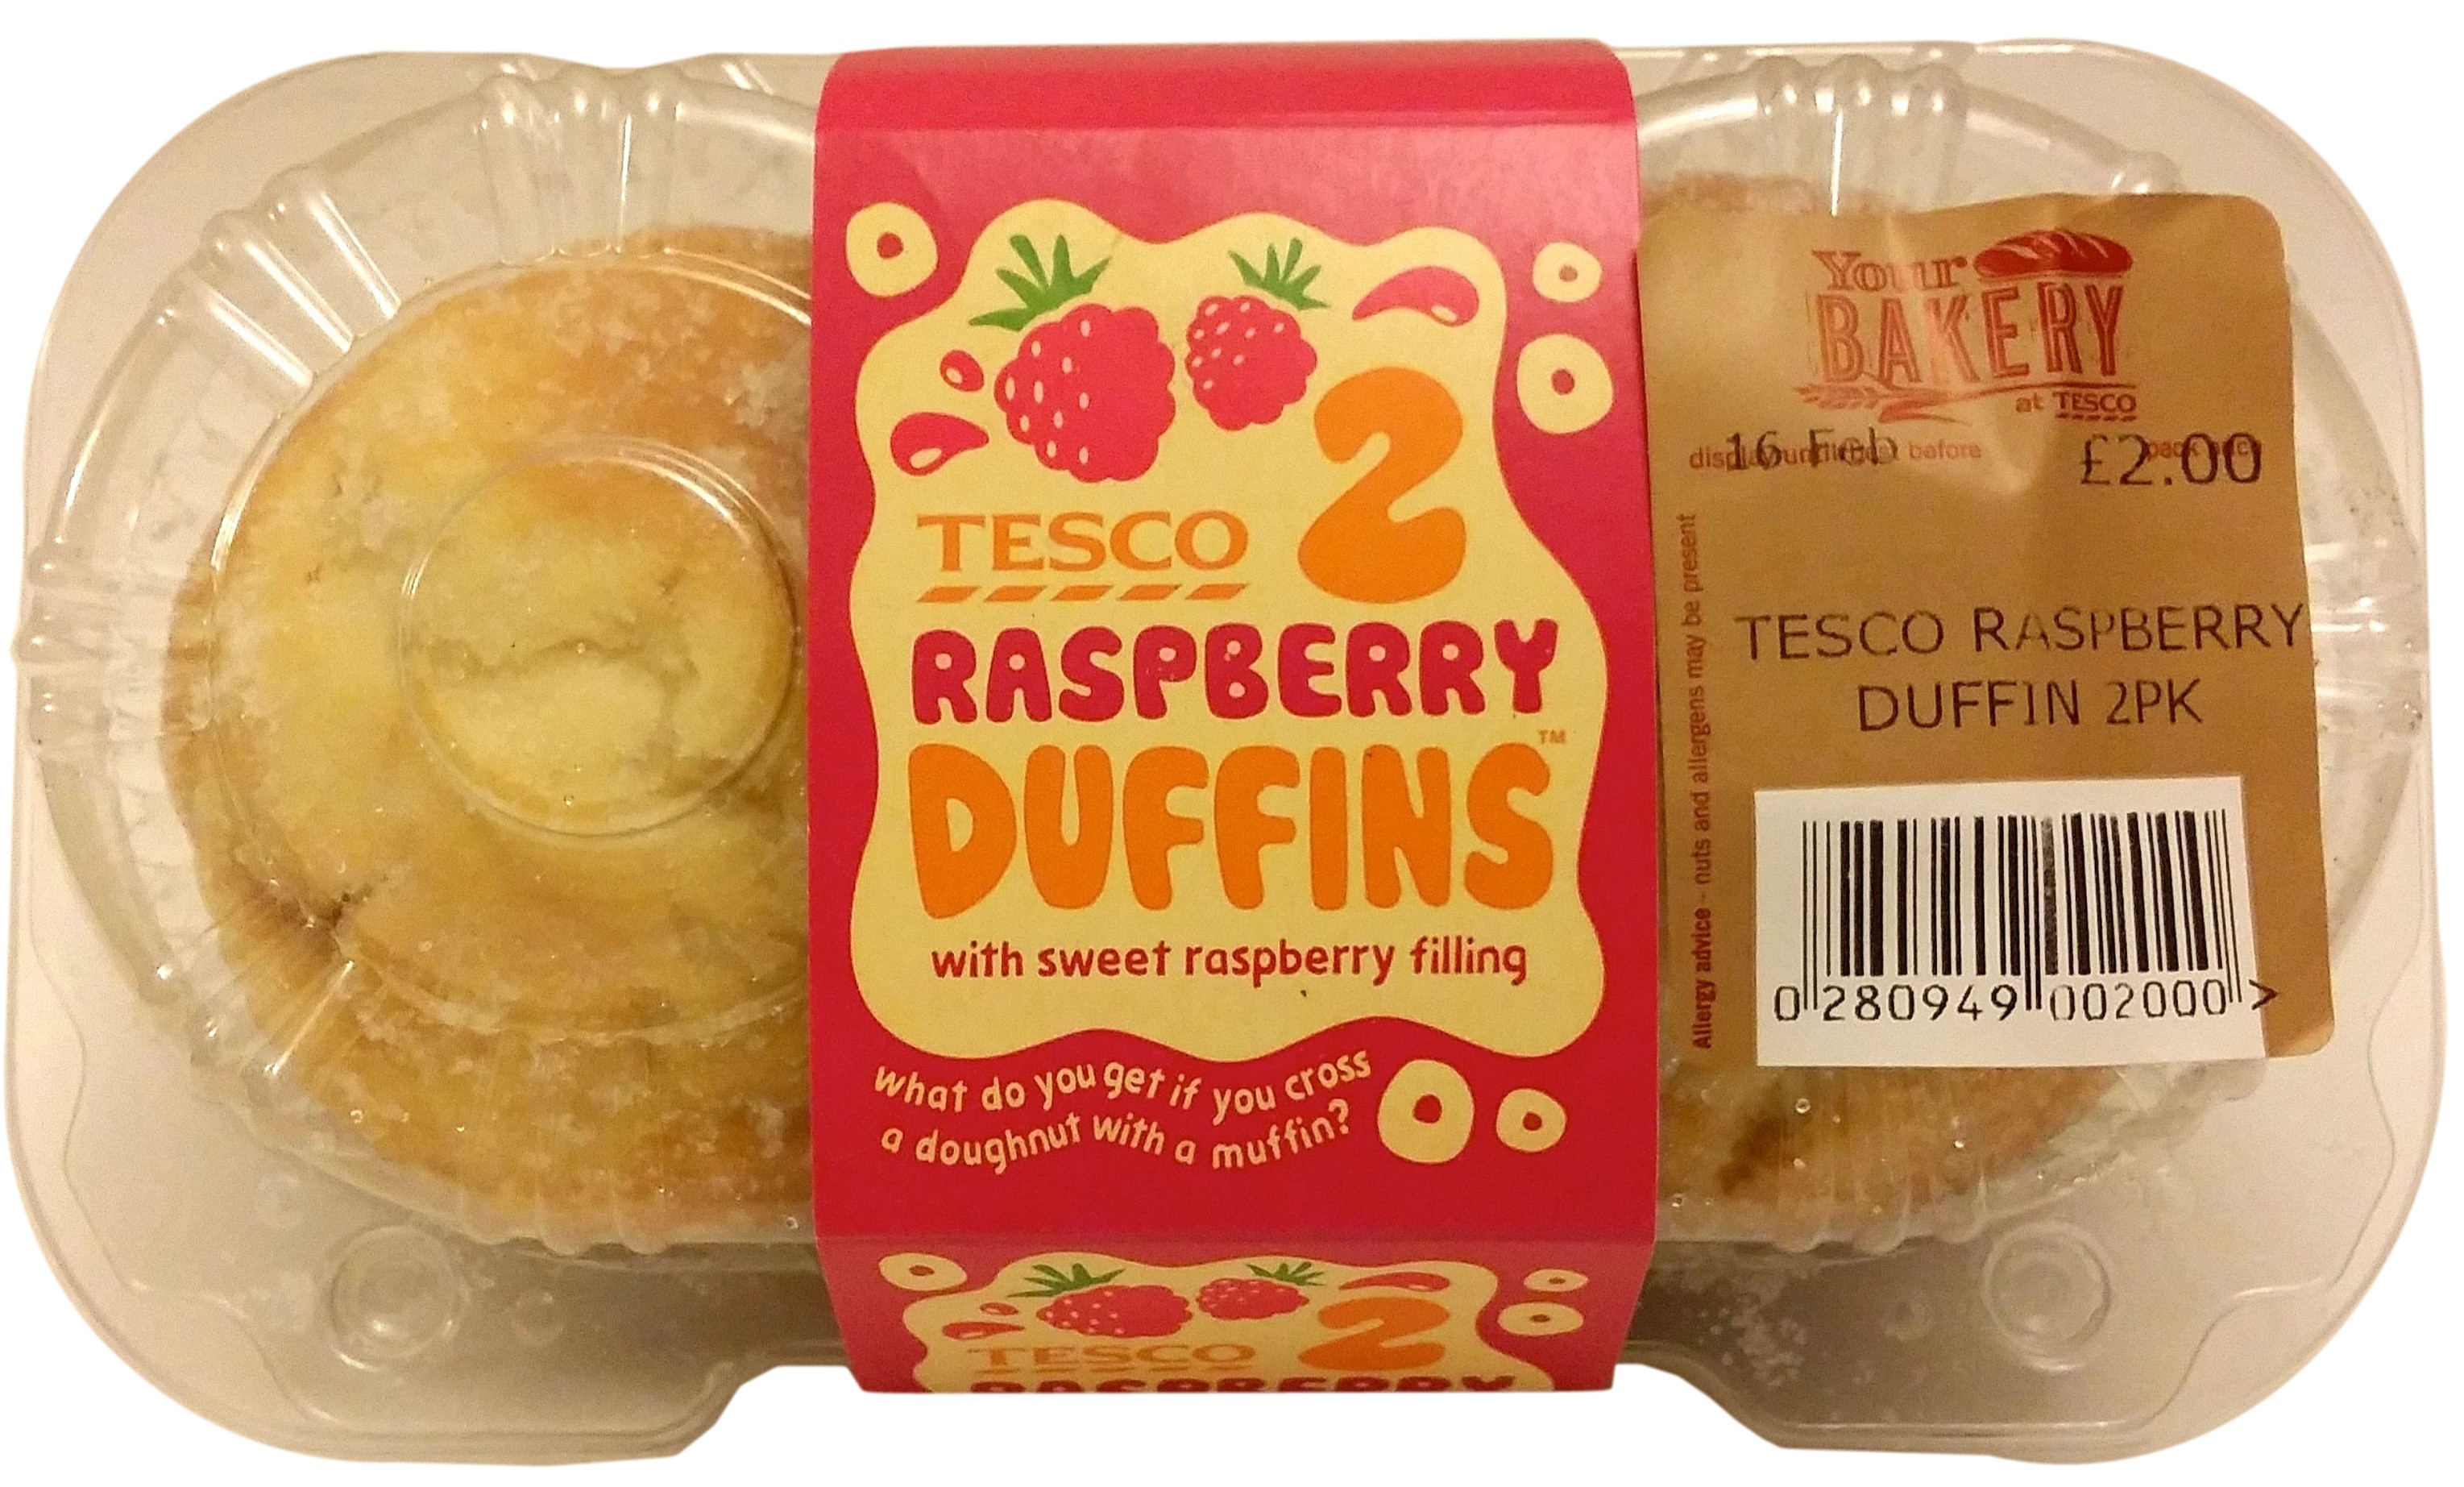 Tesco's raspberry duffins